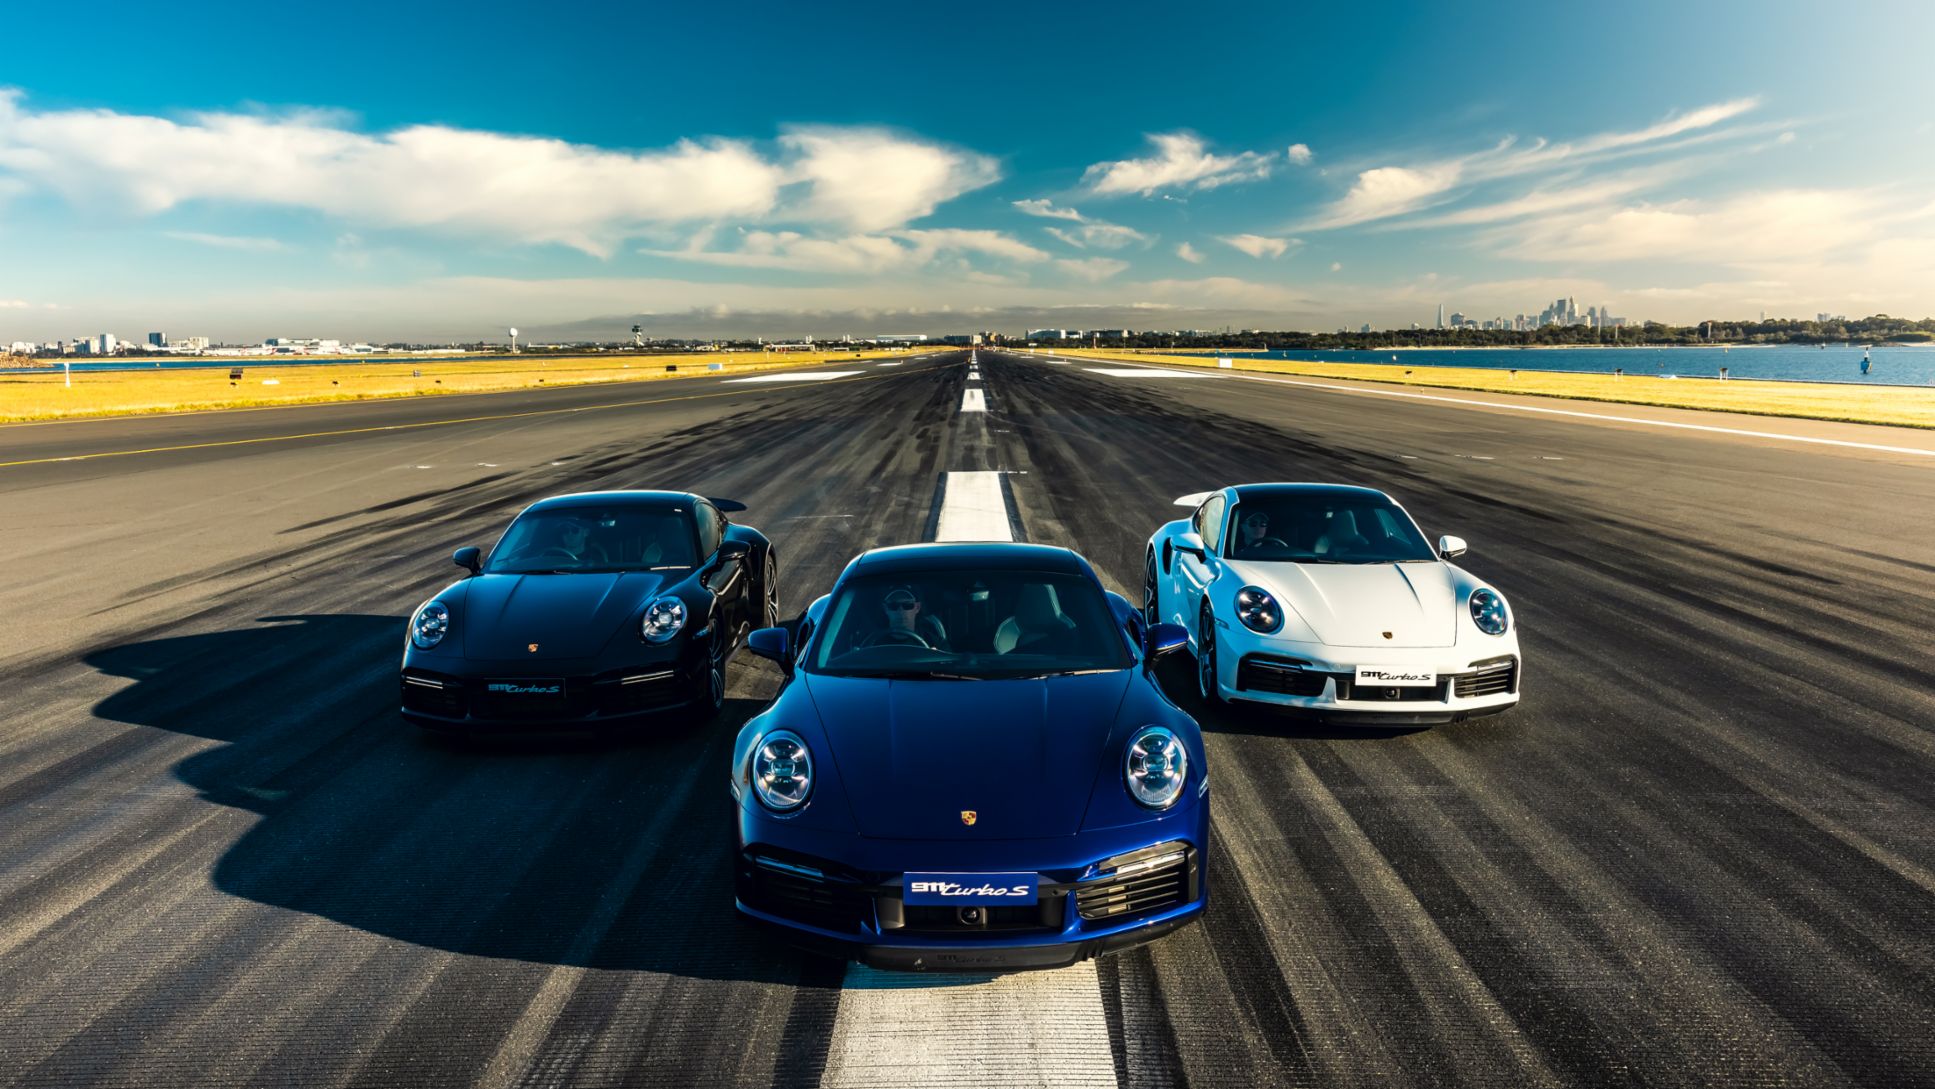 Porsche 911 Turbo S, Launch Control-Event, Flughafen Sydney, 2020, Porsche Cars Australia